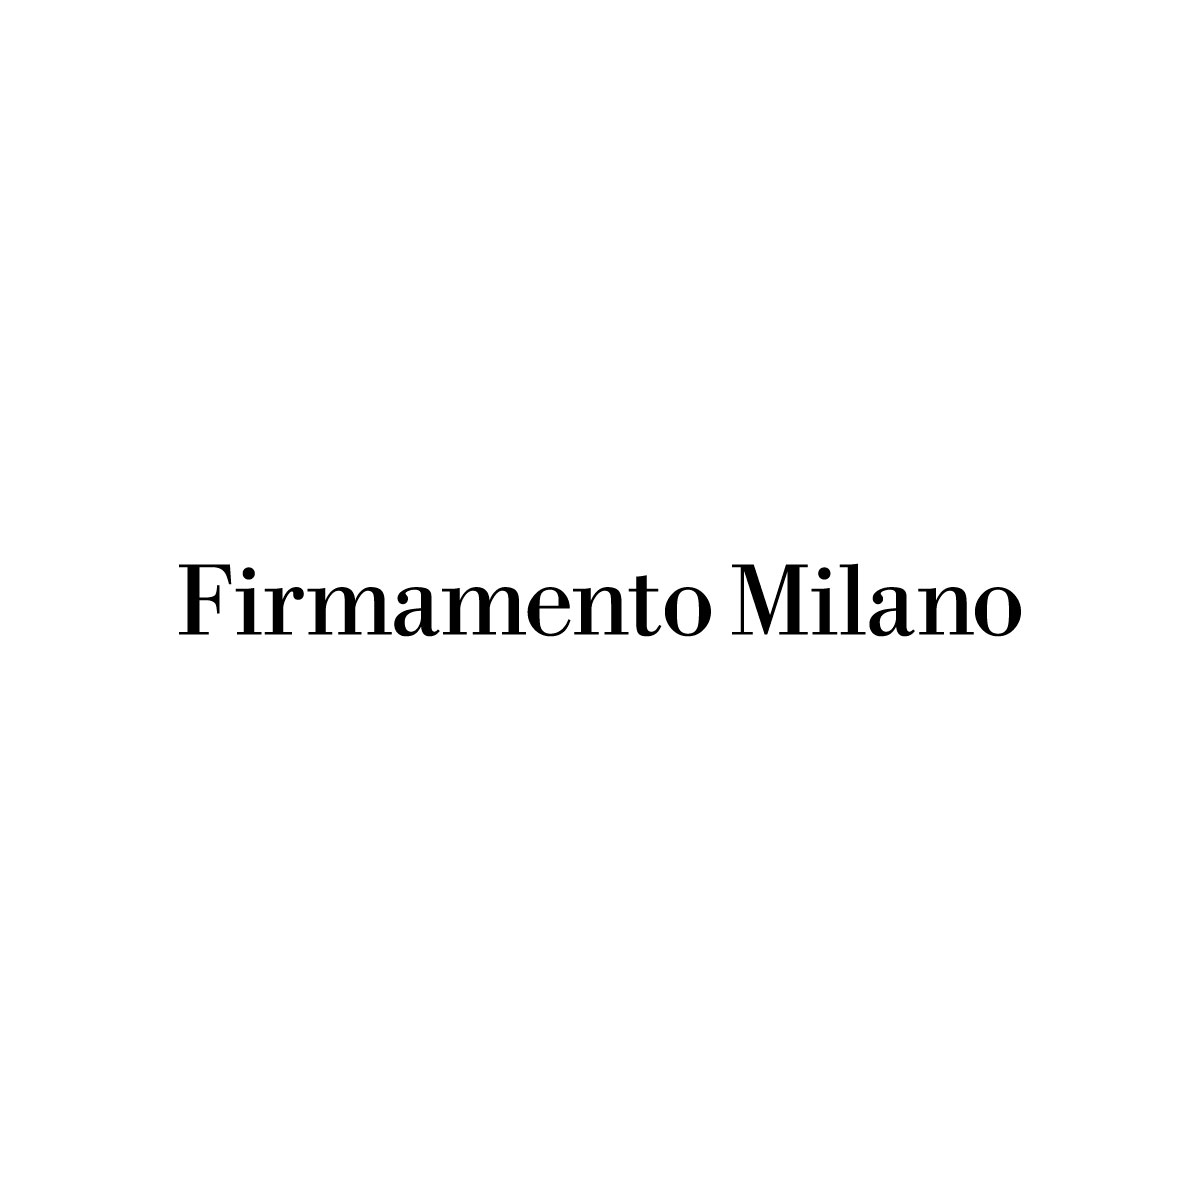 Firmamento Milano